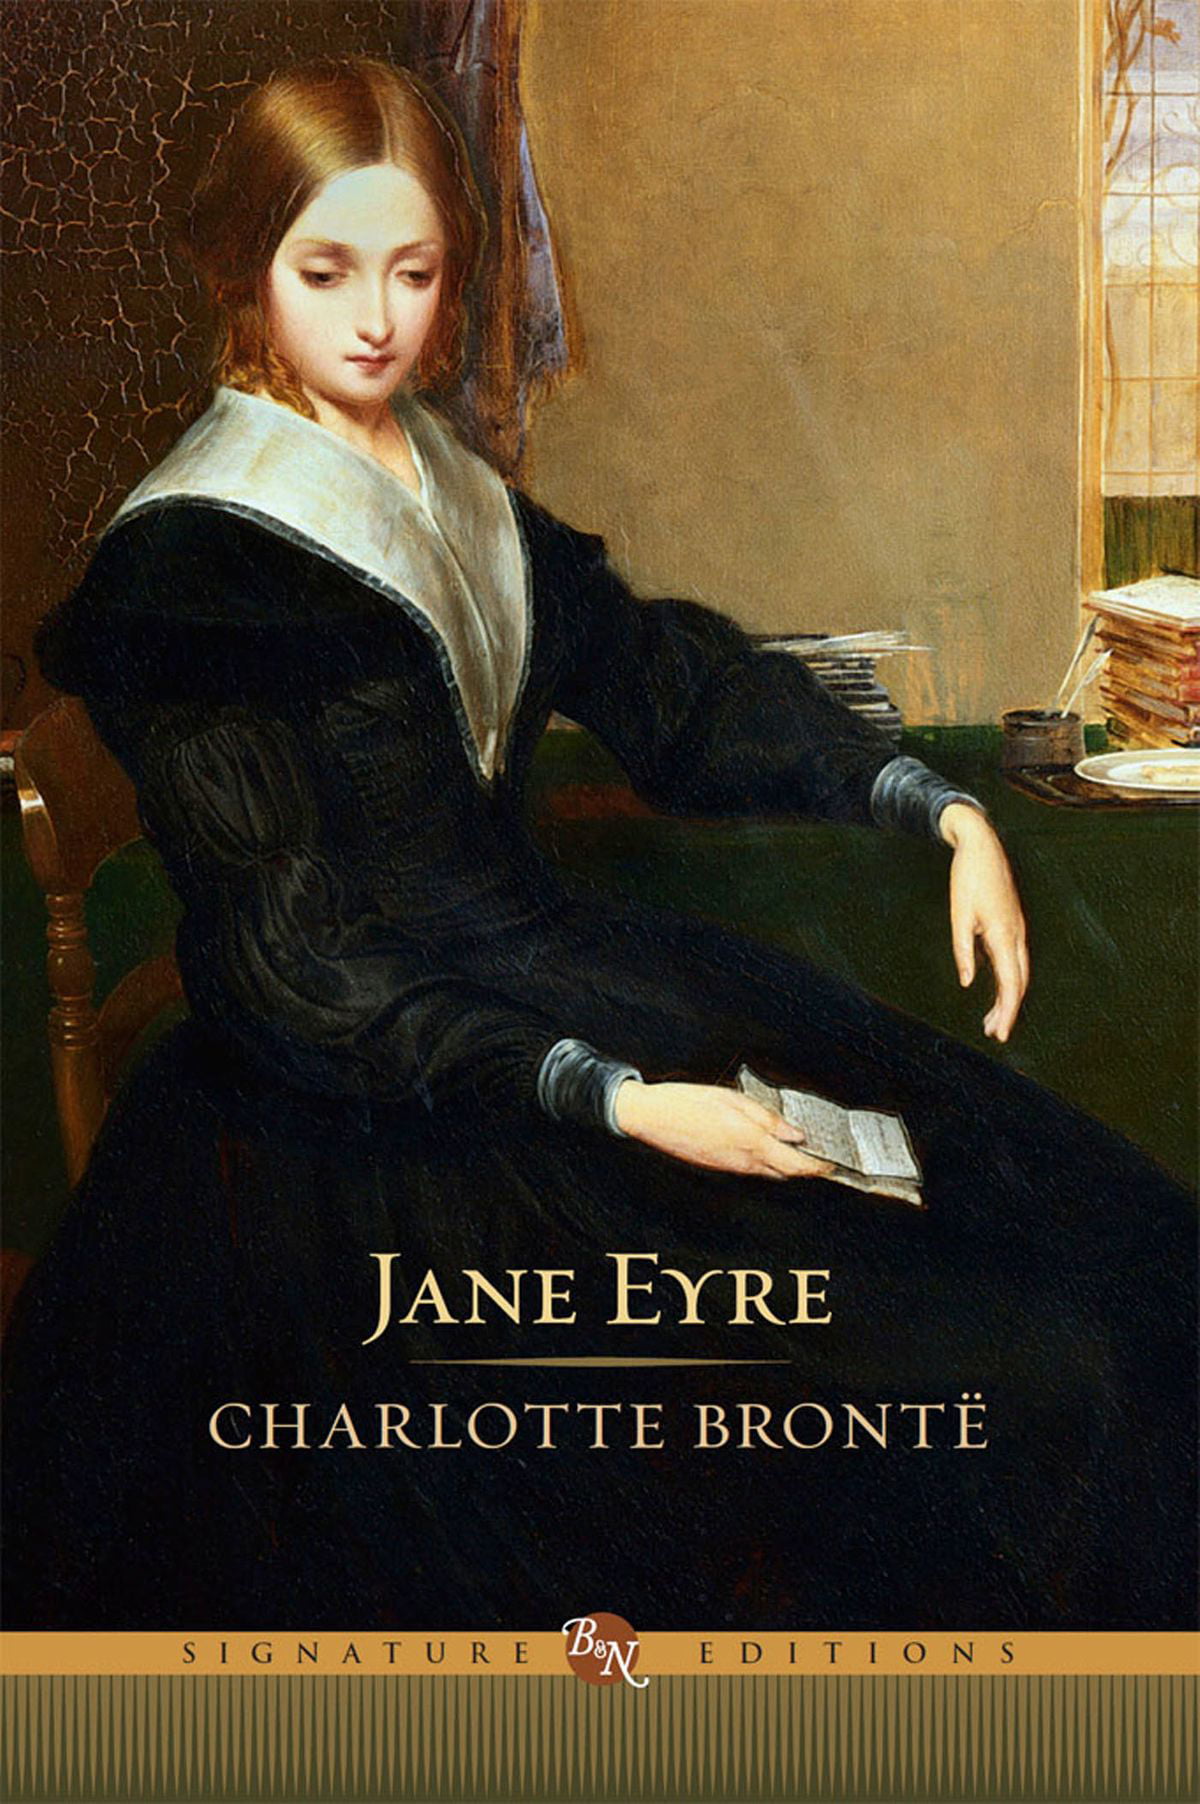 literary background of jane eyre